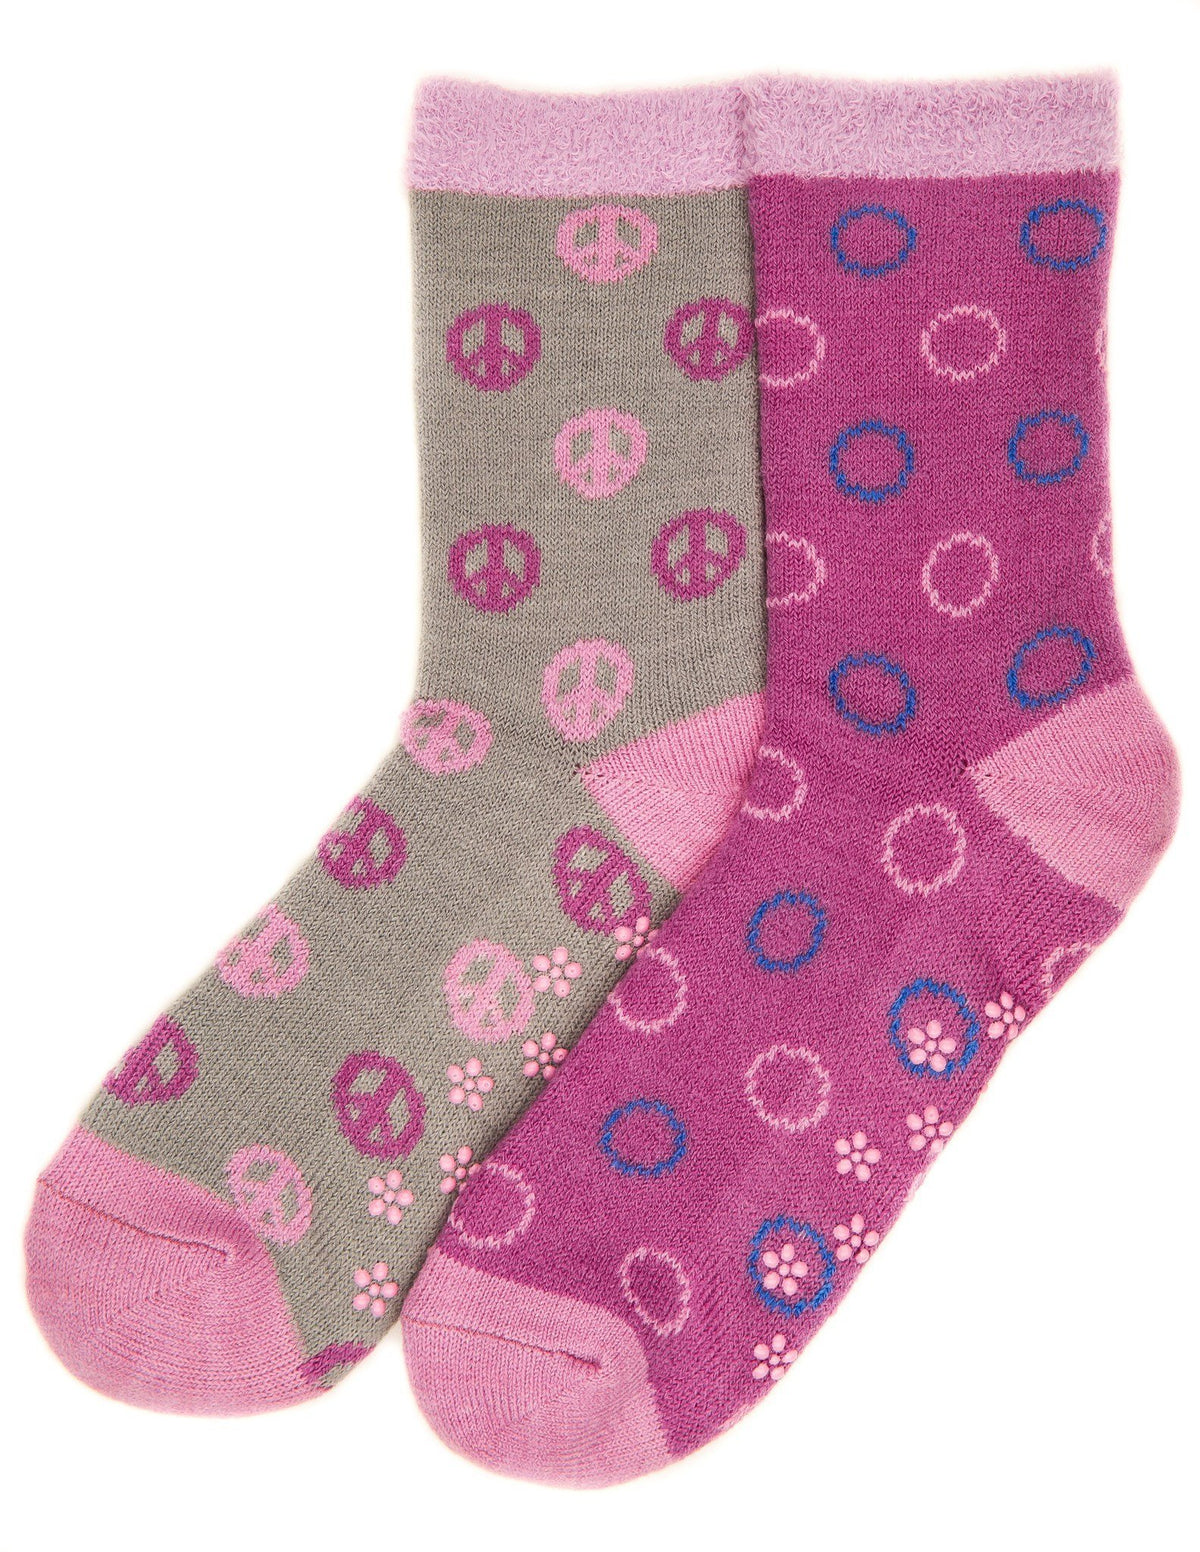 Women's Soft Premium Double Layer Winter Crew Socks - 2 Pairs - Set A4